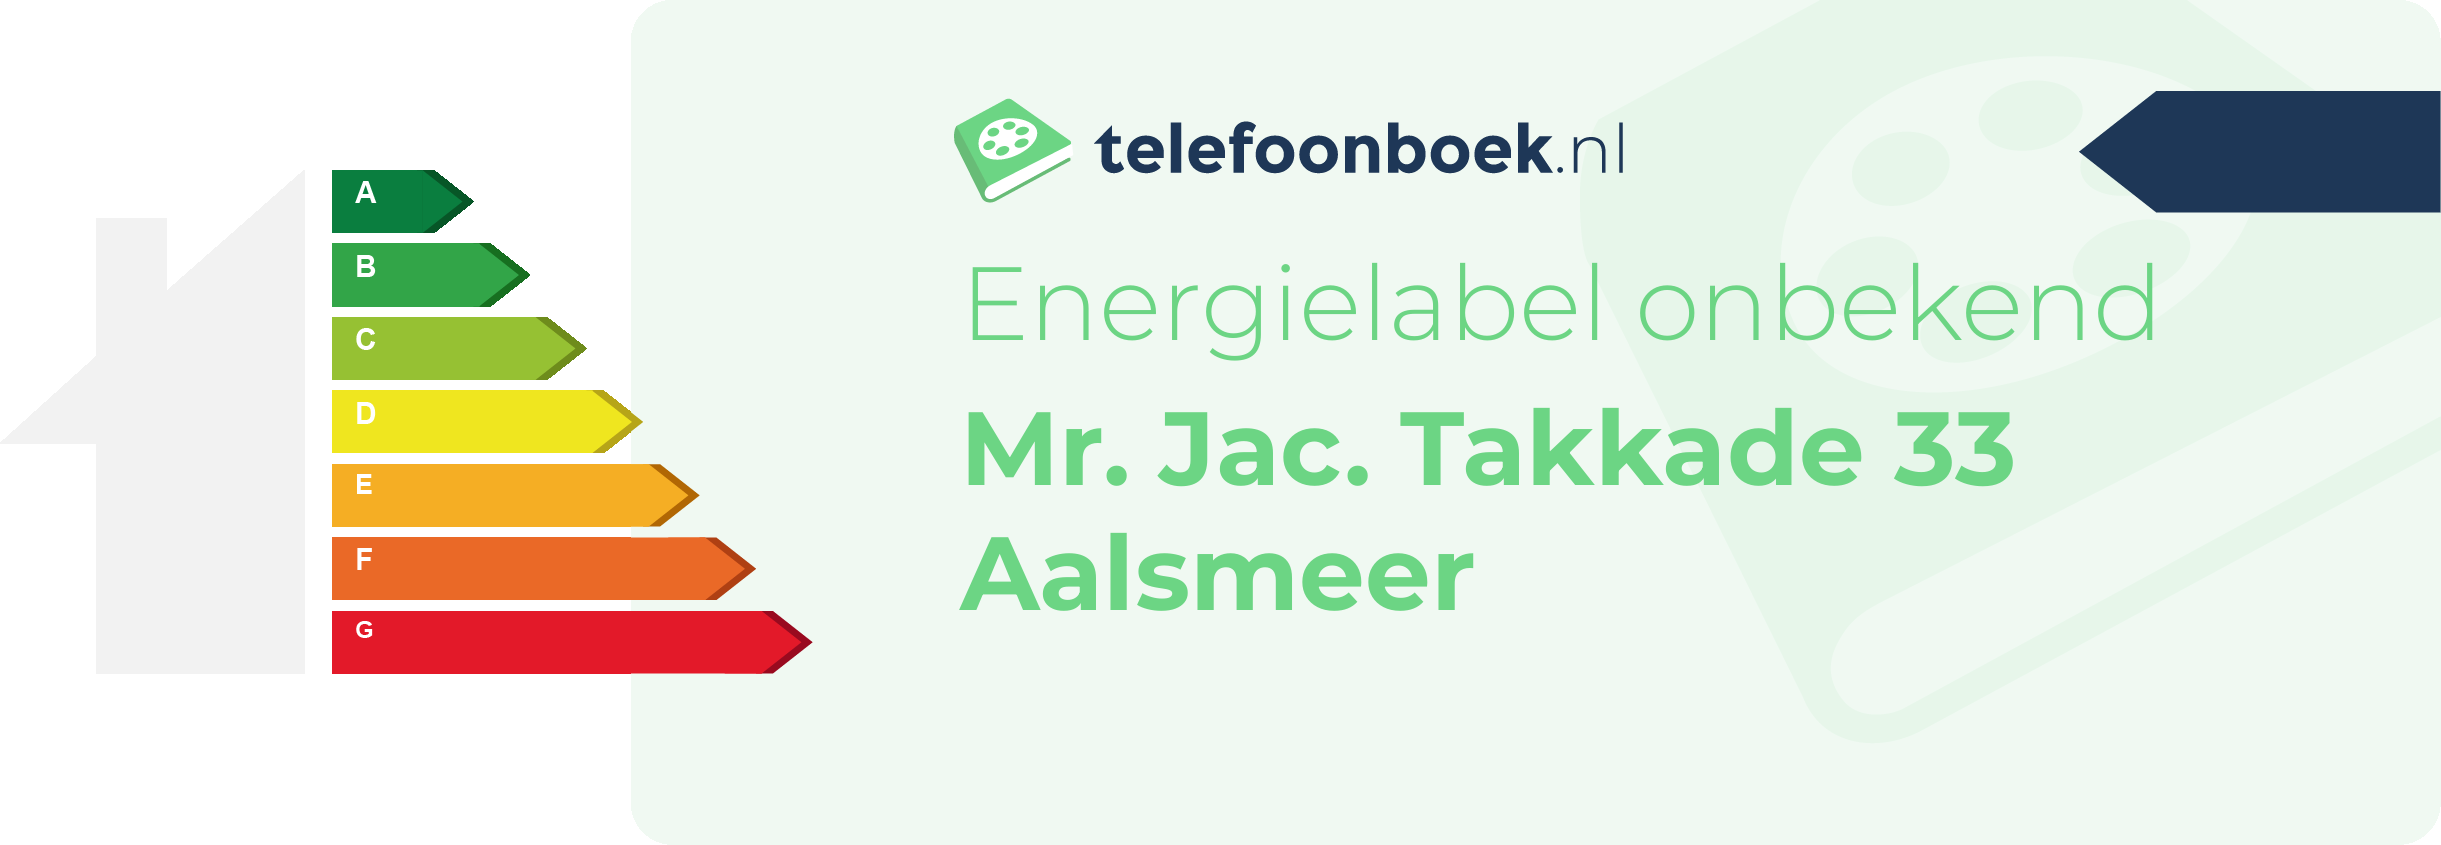 Energielabel Mr. Jac. Takkade 33 Aalsmeer